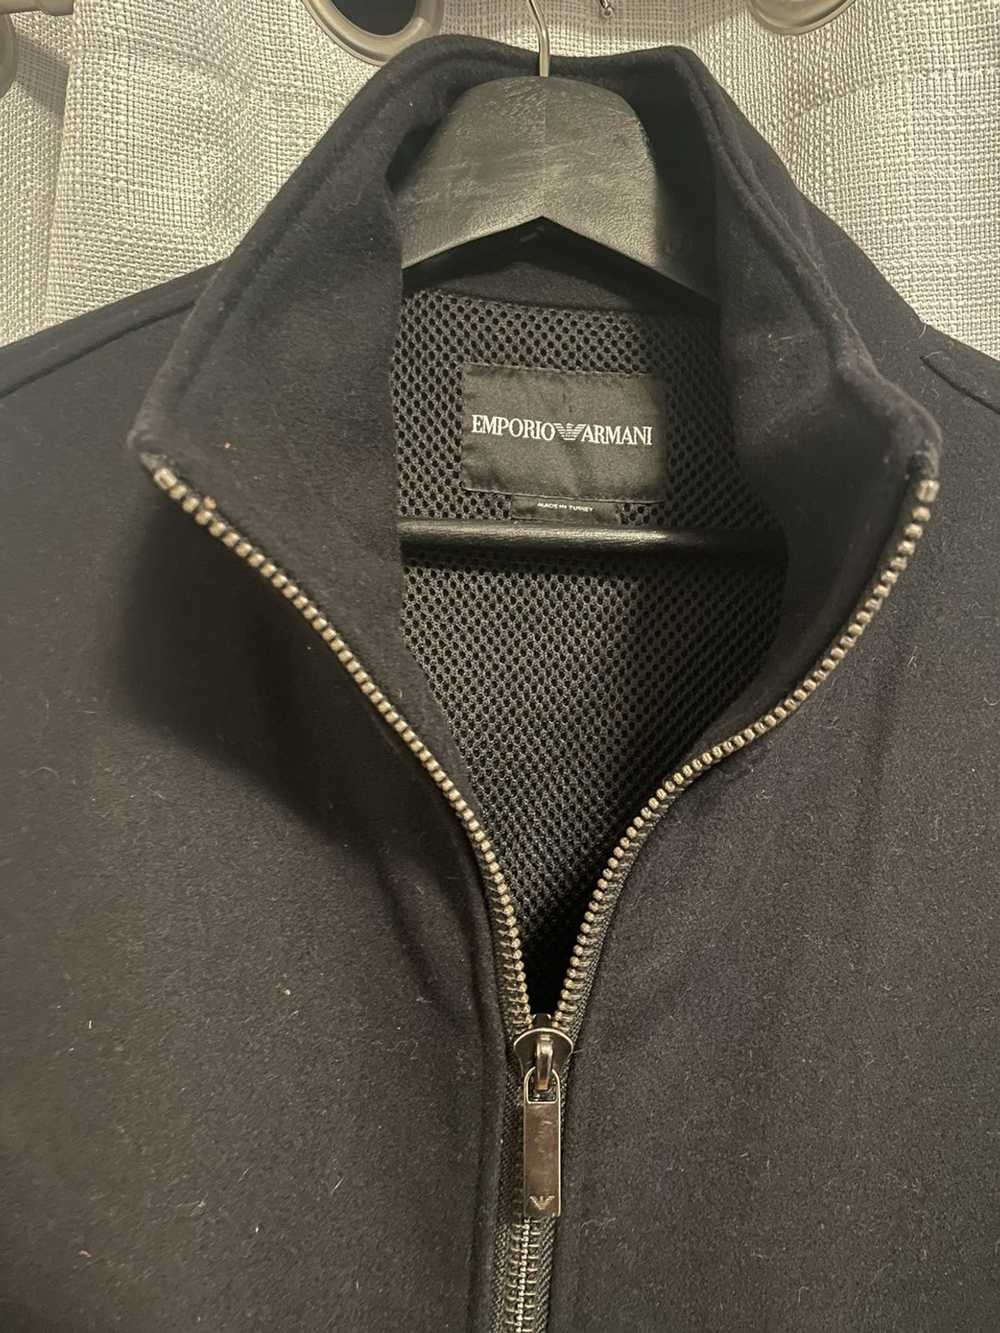 Emporio Armani Black Technical Jacket - image 2